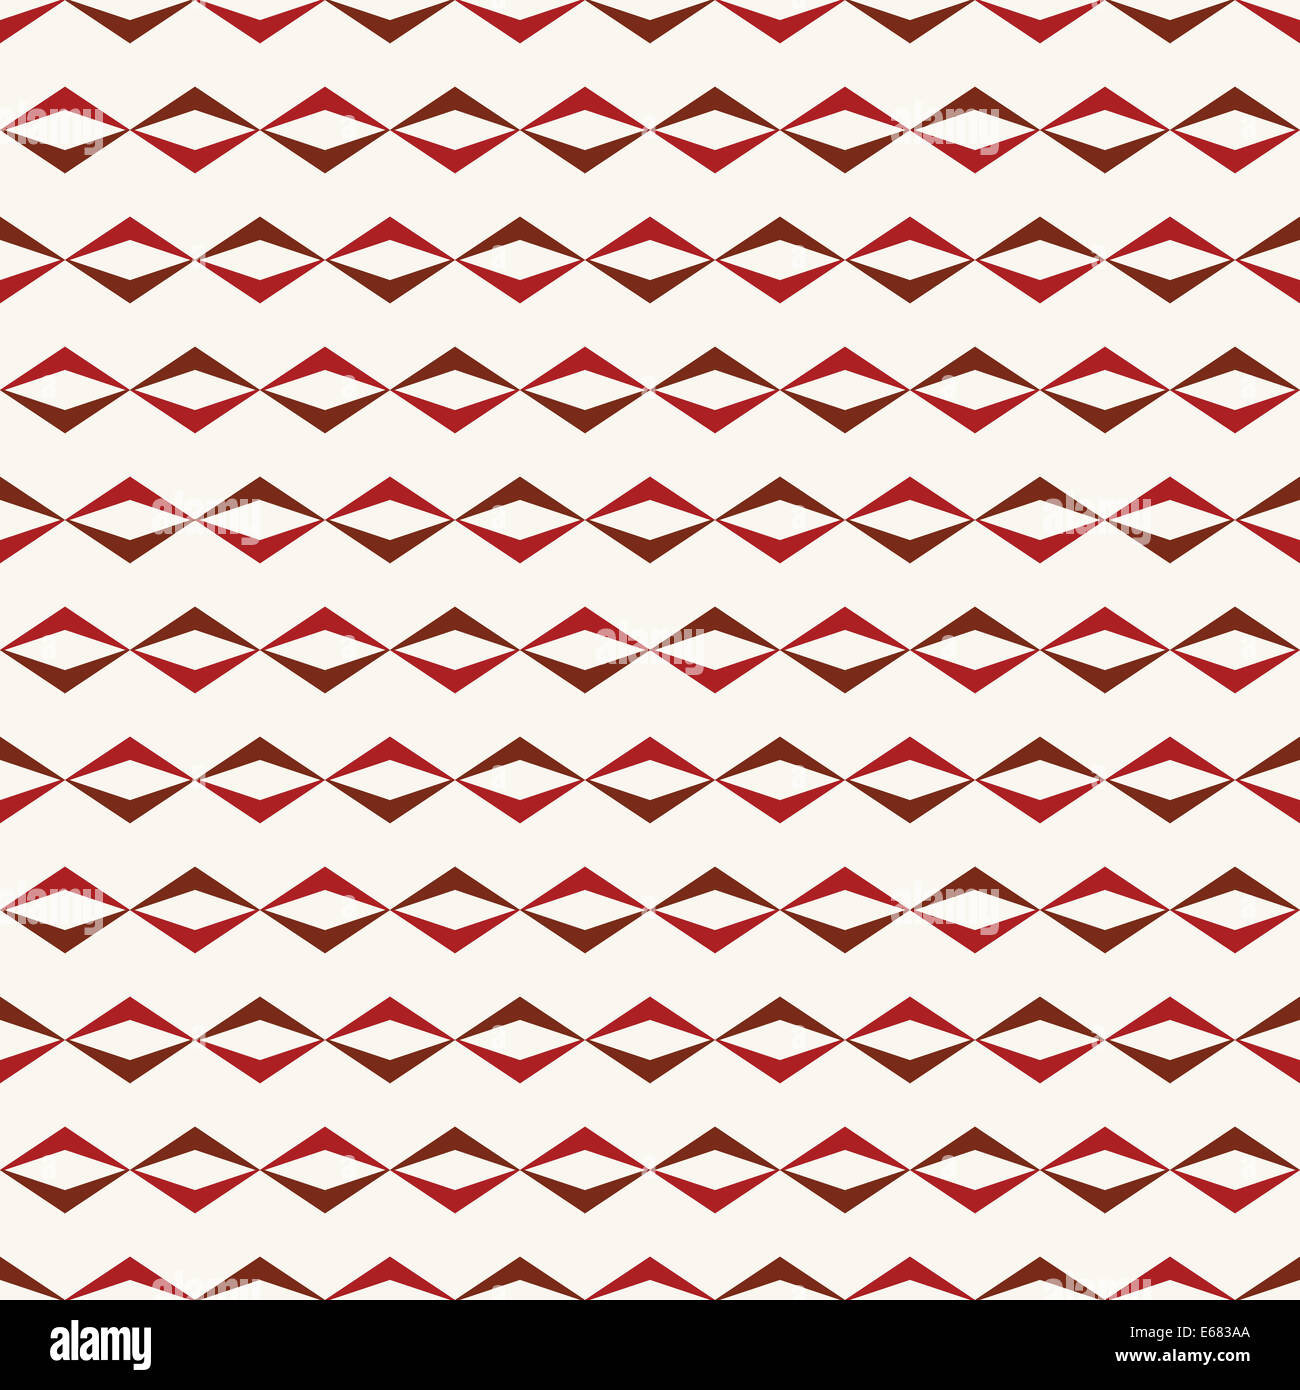 Retro-nahtlose Muster mit Dreieck, Raute Formen. Stockfoto